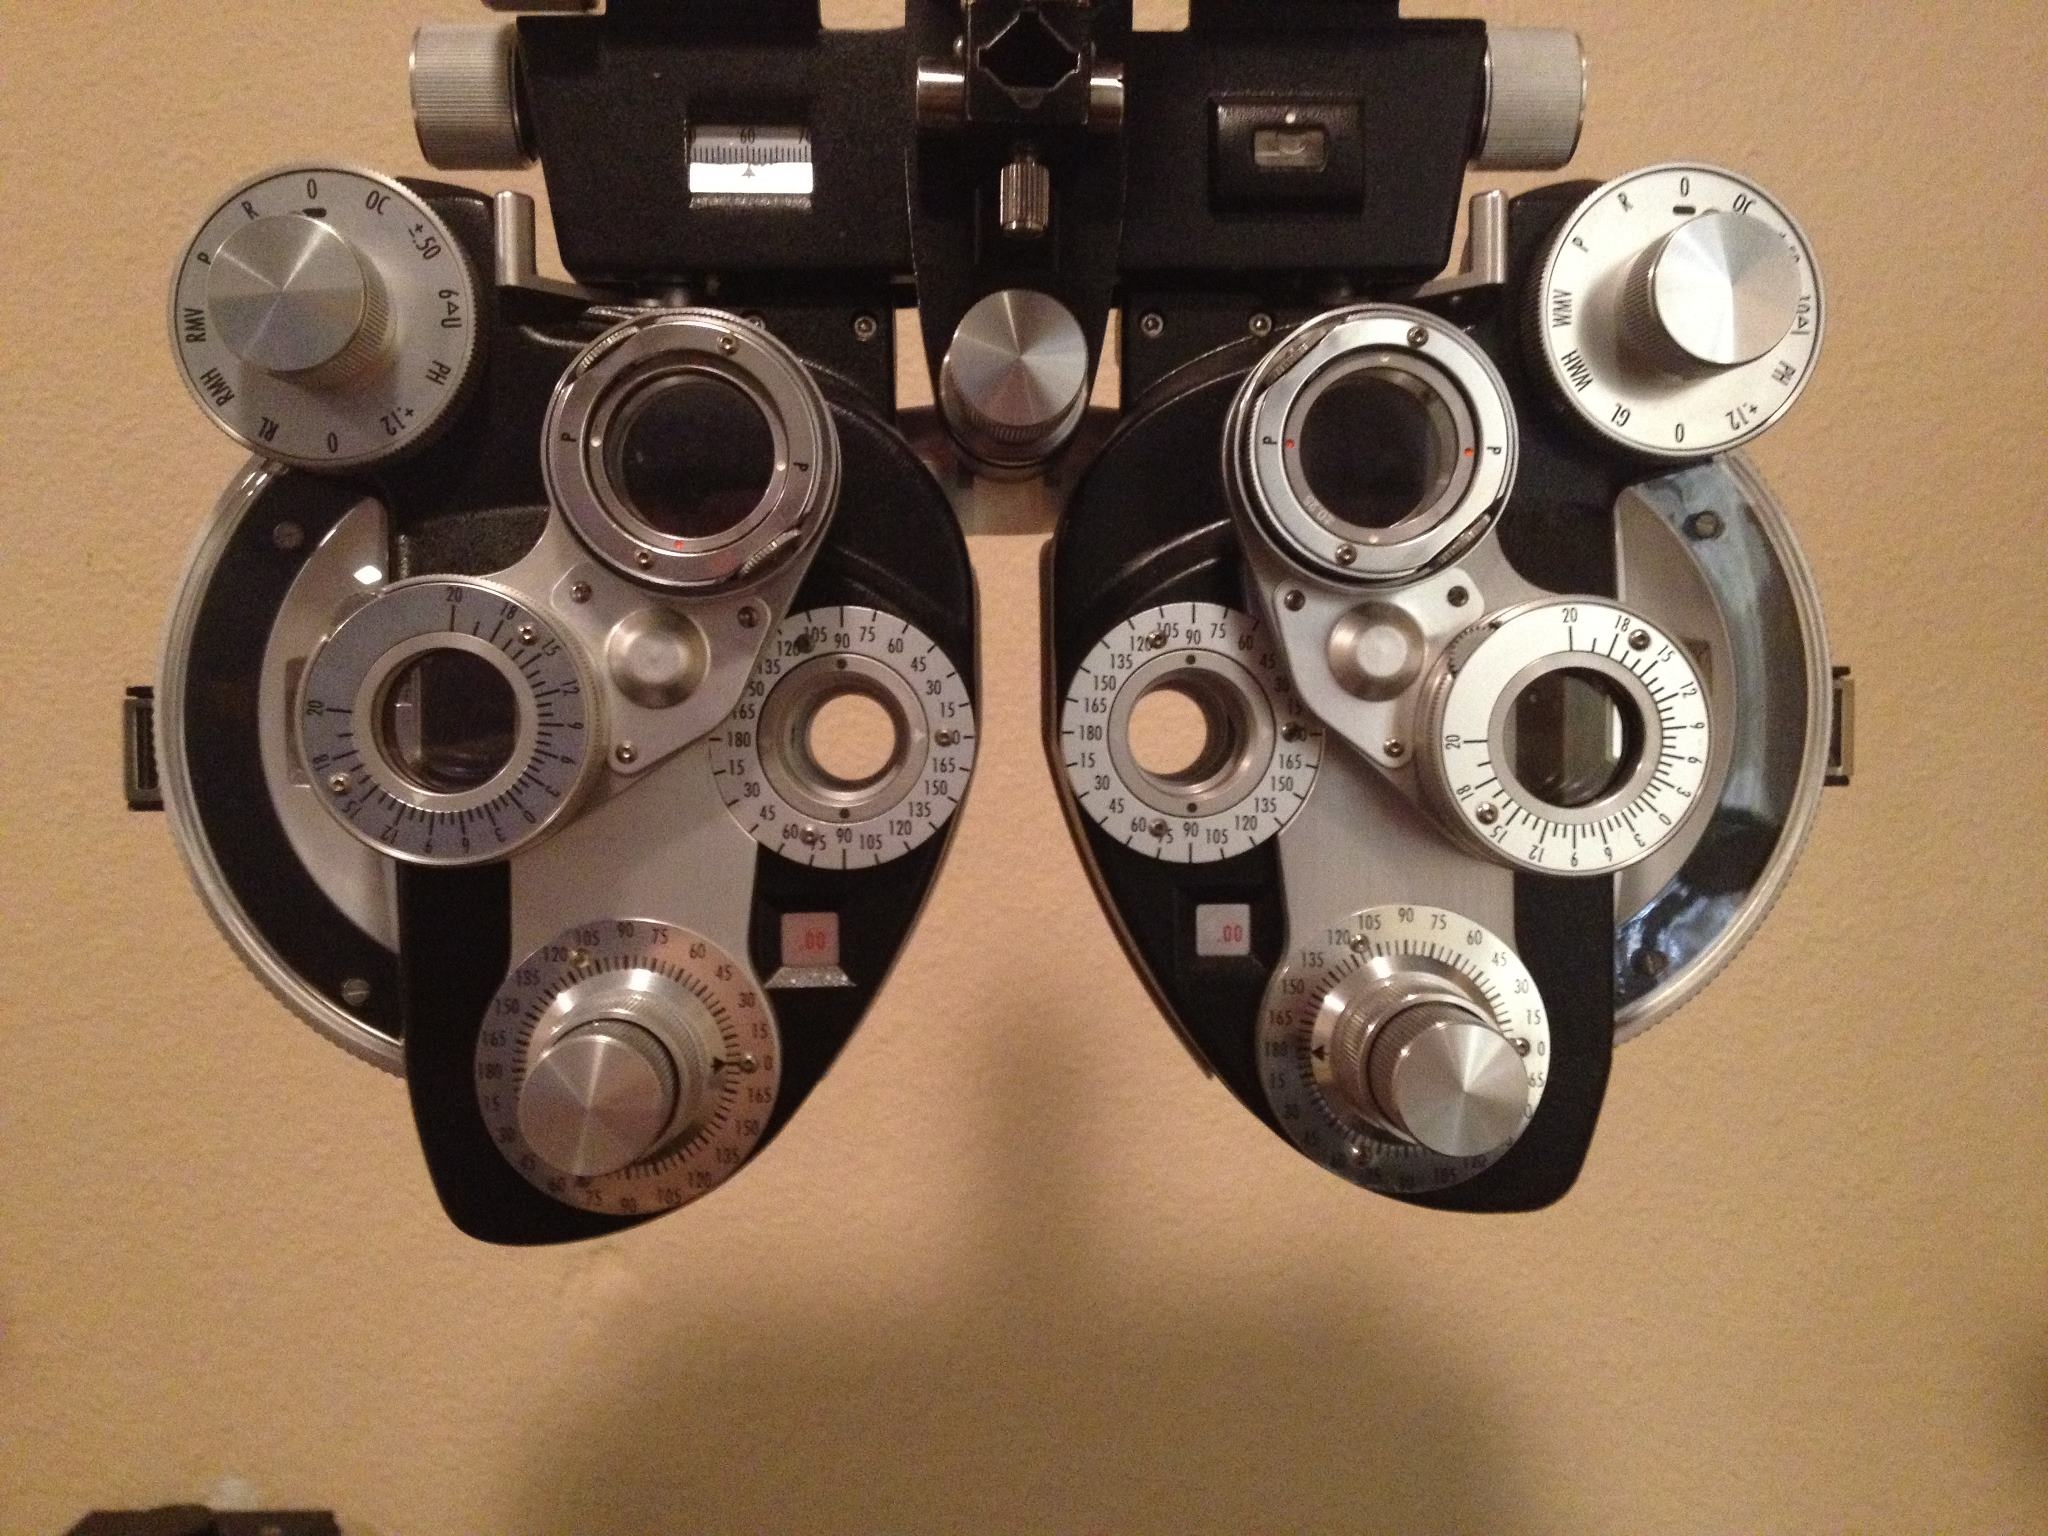 LaFont Family Eyecare Optometry Photo